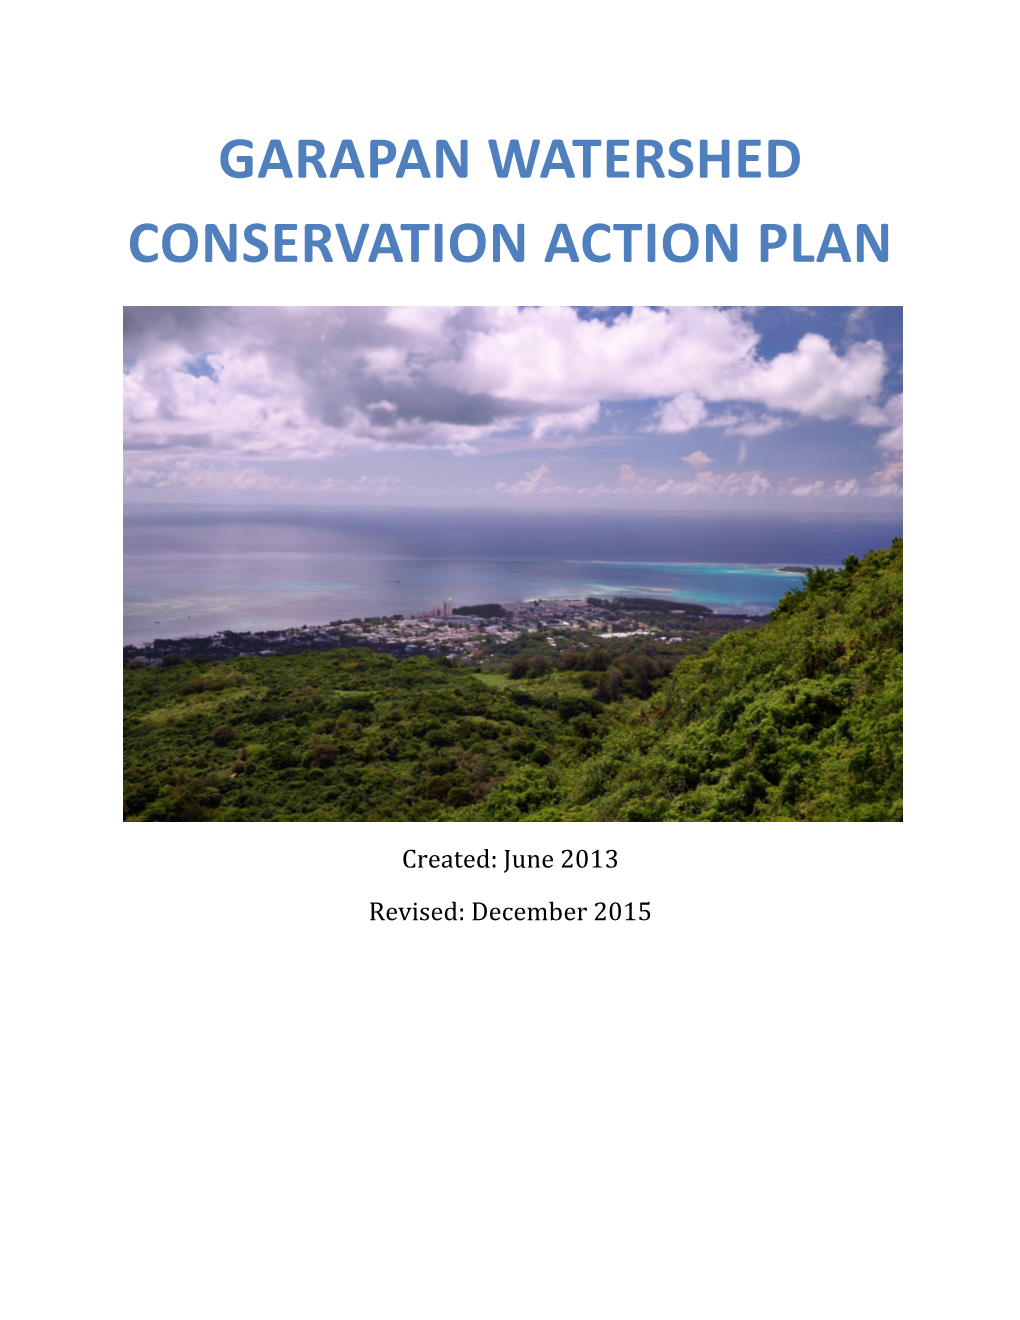 Garapan Watershed Conservation Action Plan